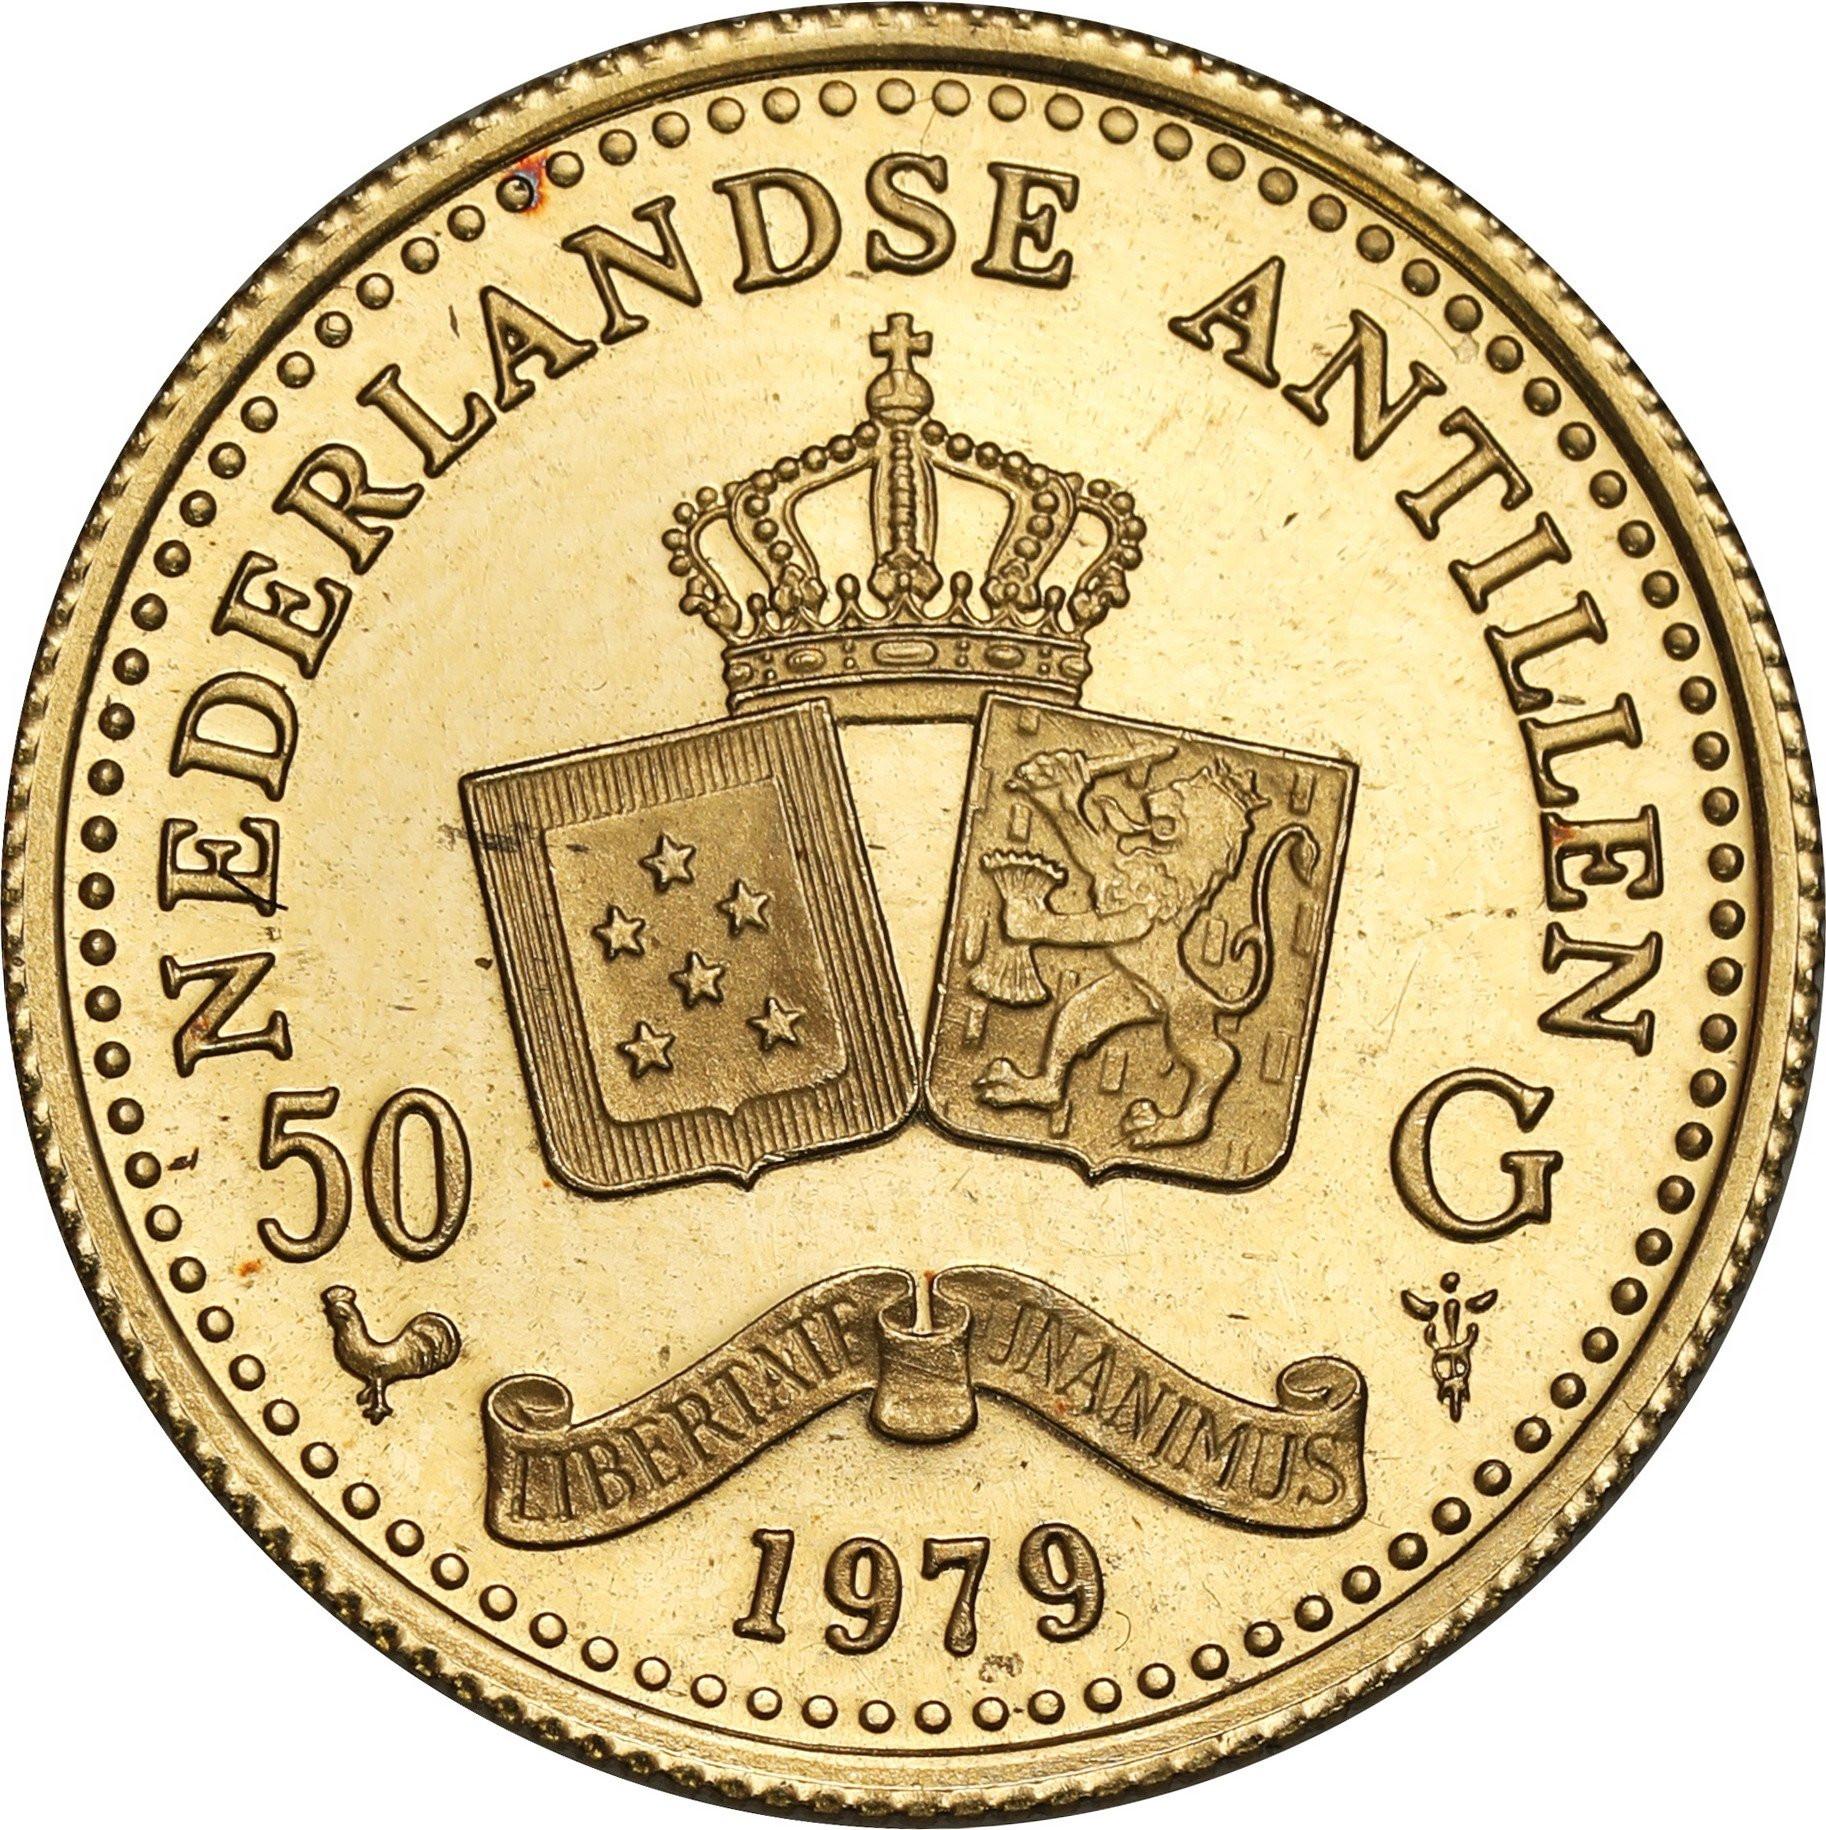 Holandia. 50 guldenów 1979 - Julianna